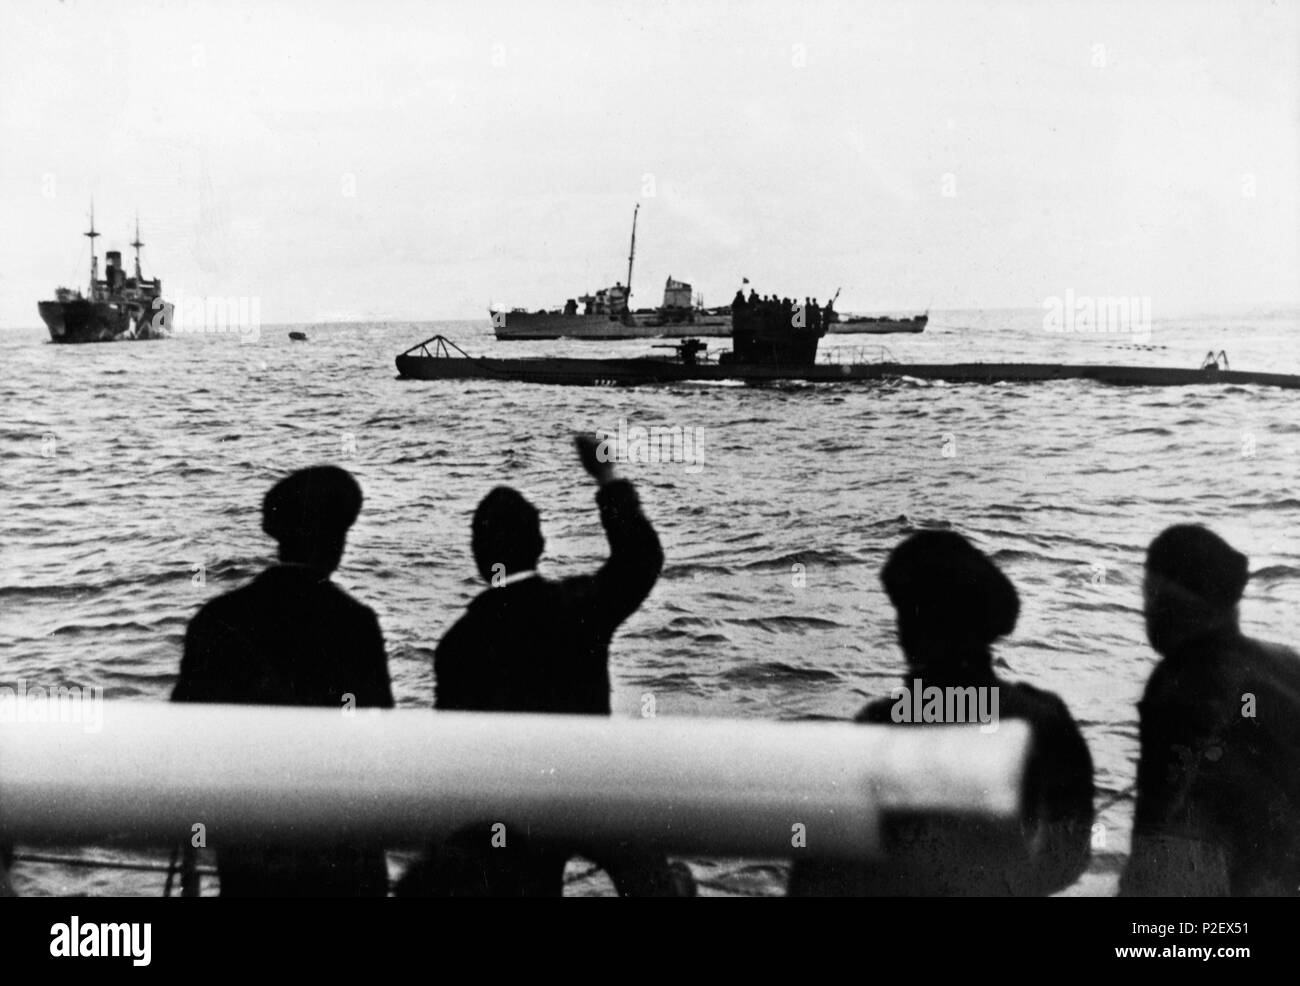 Submarino alemán saliendo de un puerto. Stock Photo